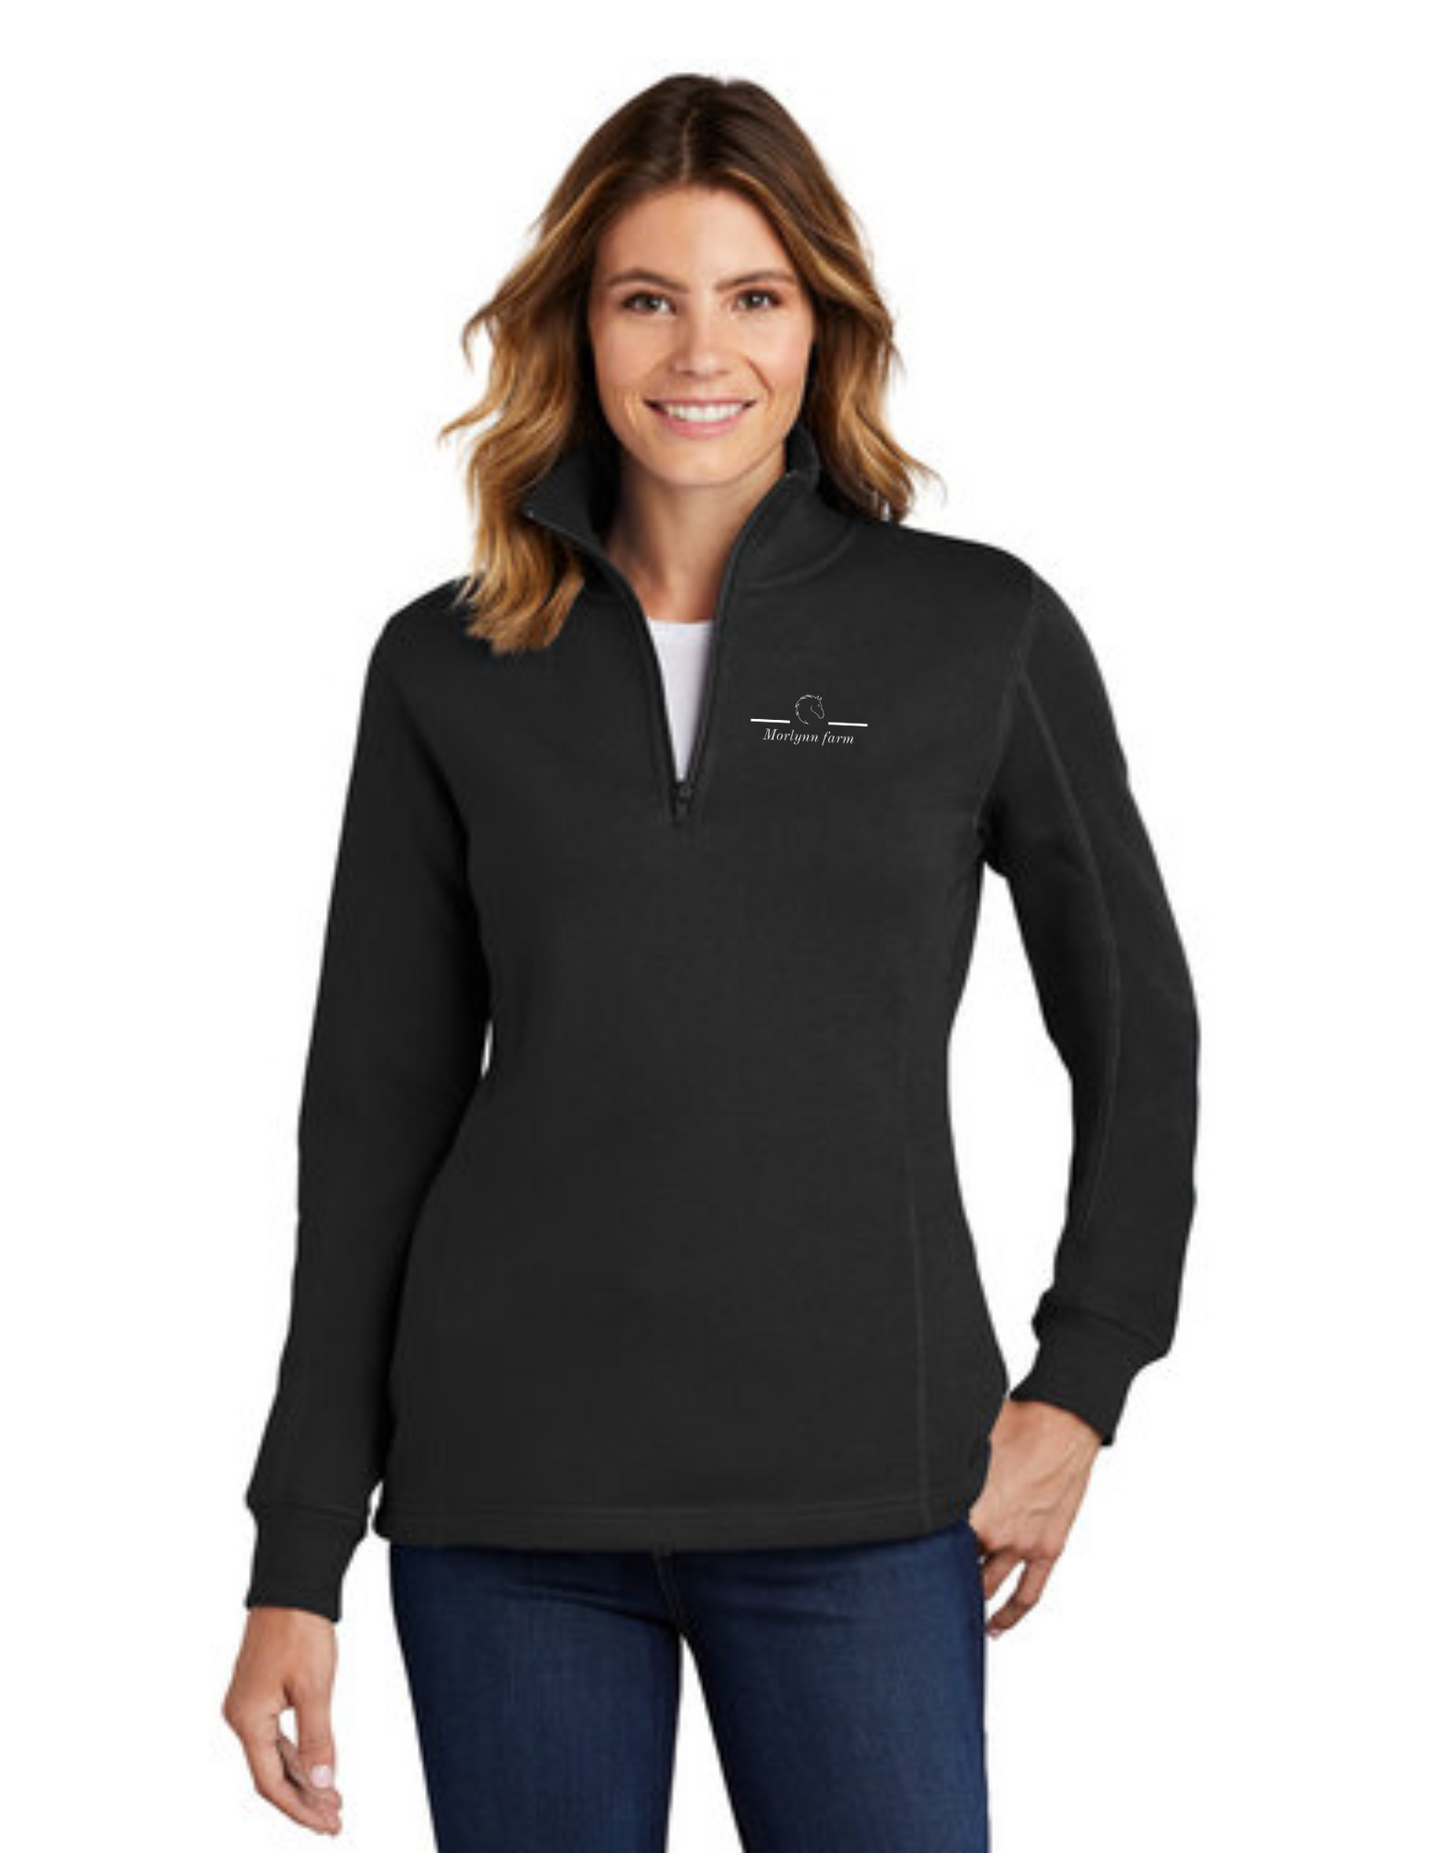 Morlynn Farm - Sport-Tek® Ladies 1/4-Zip Sweatshirt